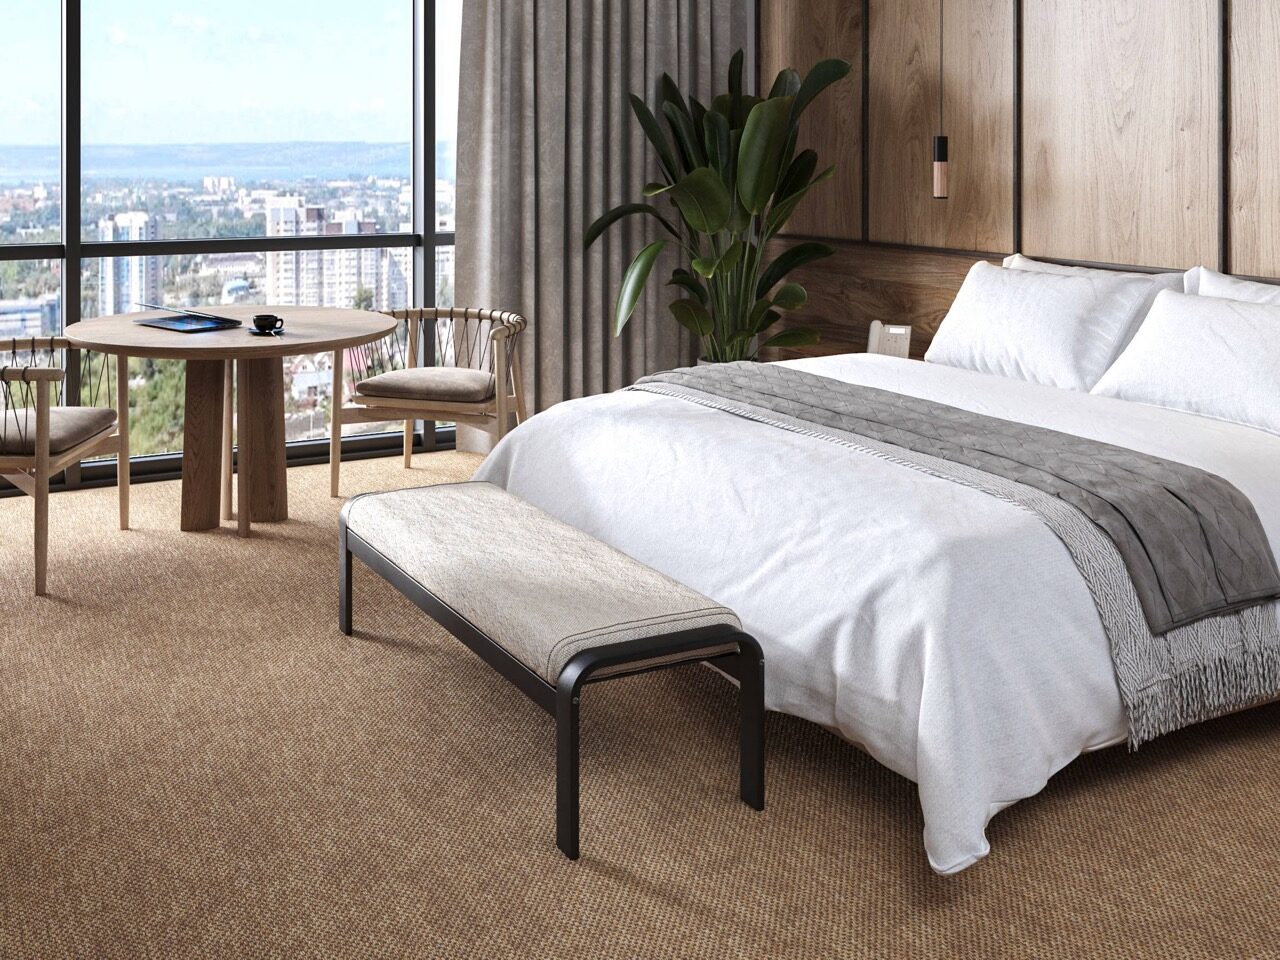 contract grade polypropylene carpet in hotel room